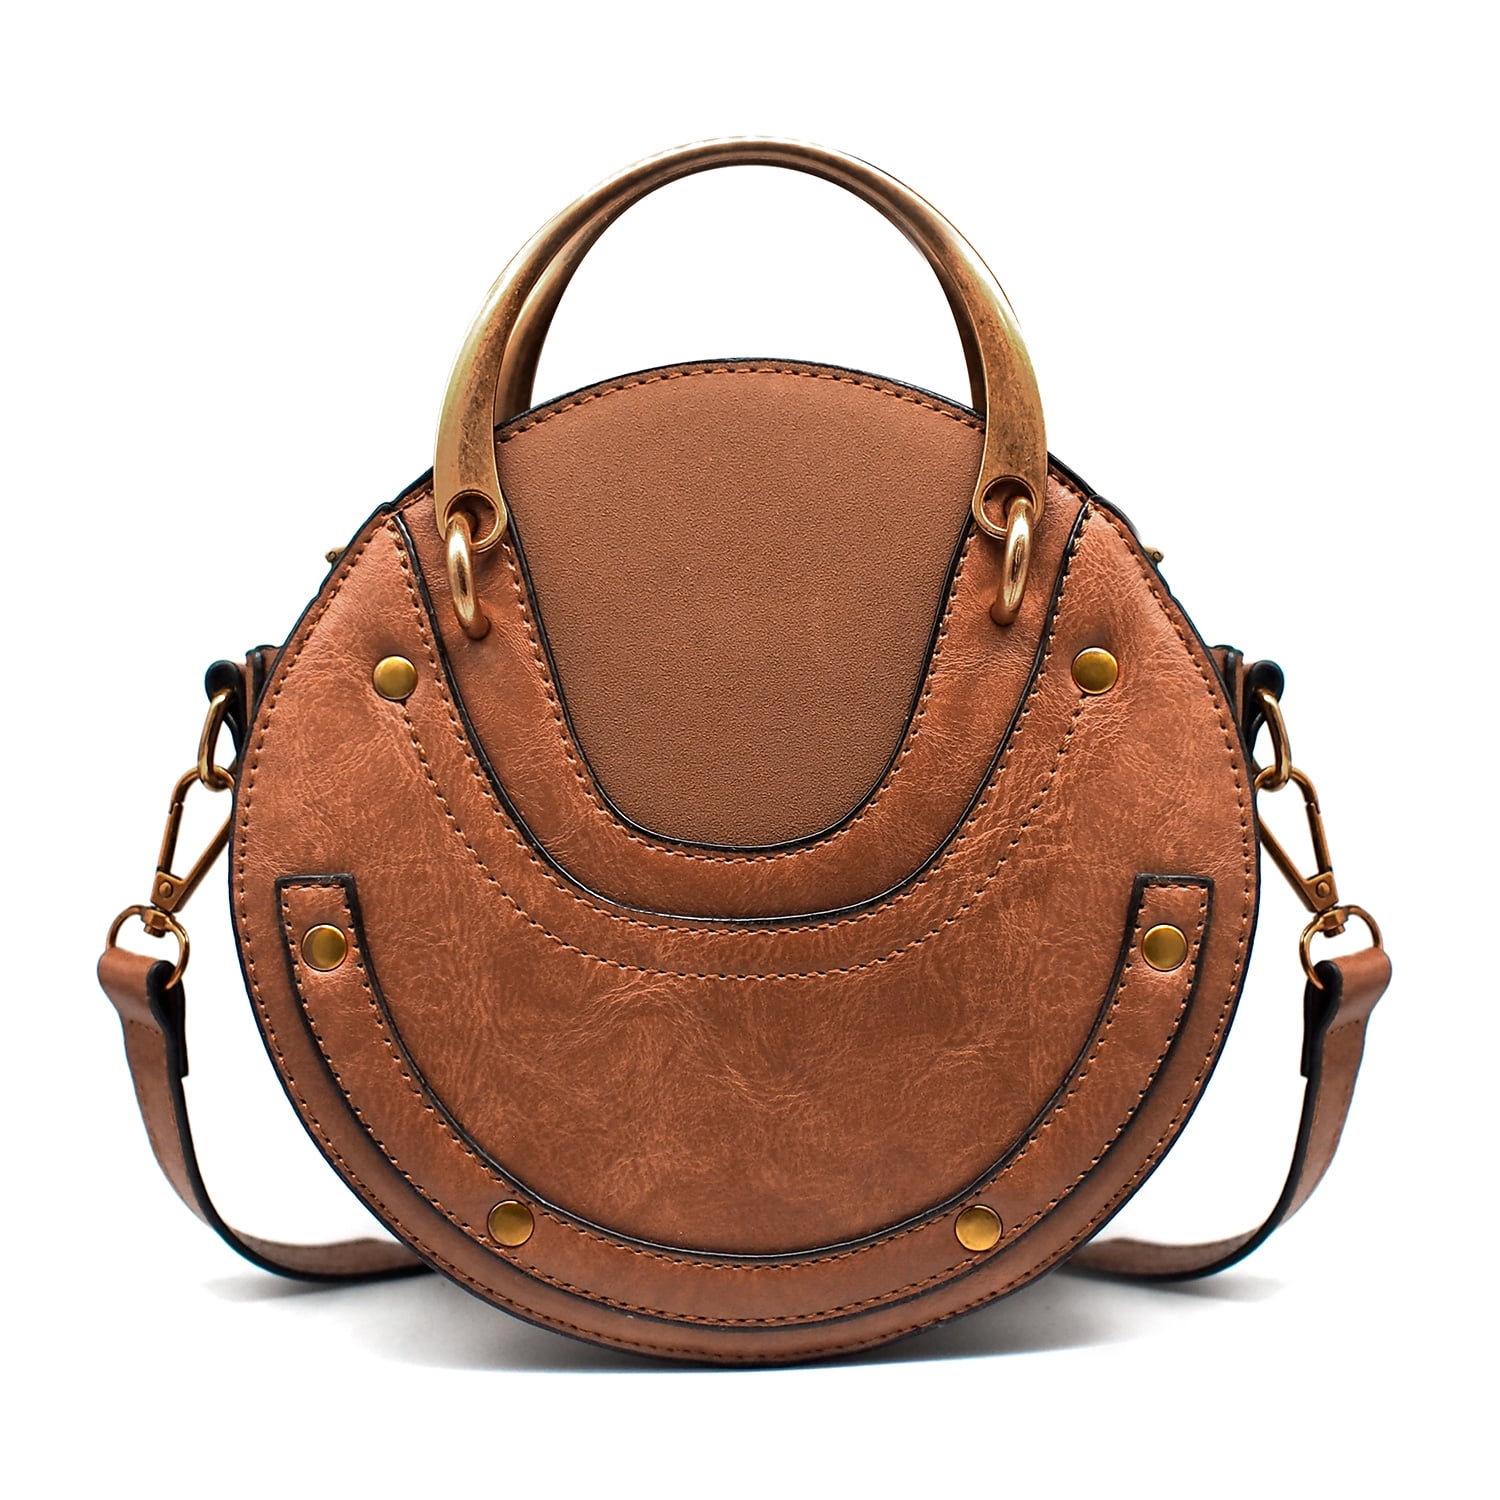 The Circle Handbag, Clutch Bag - Leather Clutch Hand Bag - Women Messenger  Bag with Circular Handle, Shoulder Bag